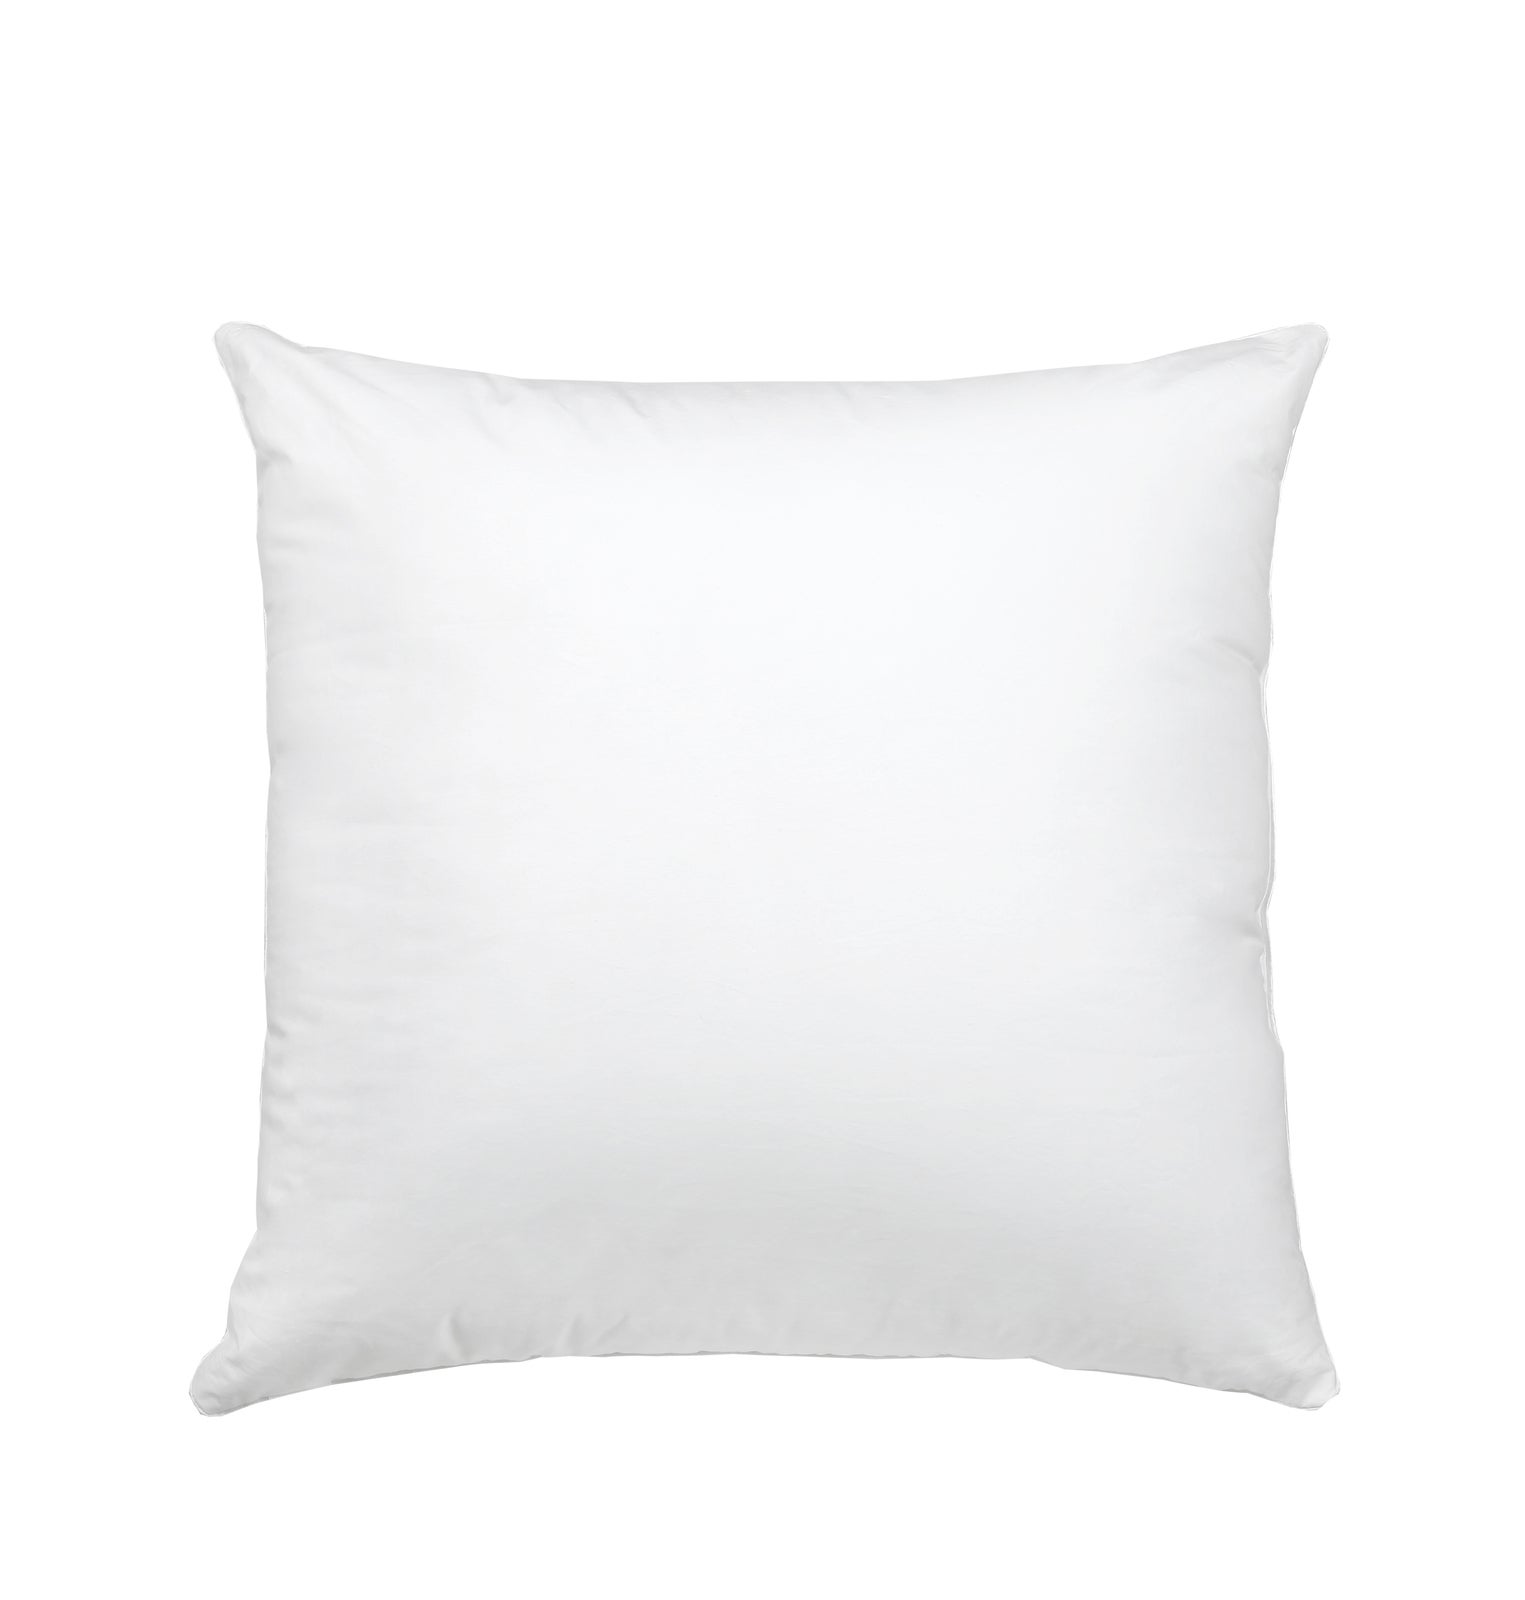 Dreamaker Down Alternative Microfibre European Pillow - 65 X 65 Cm